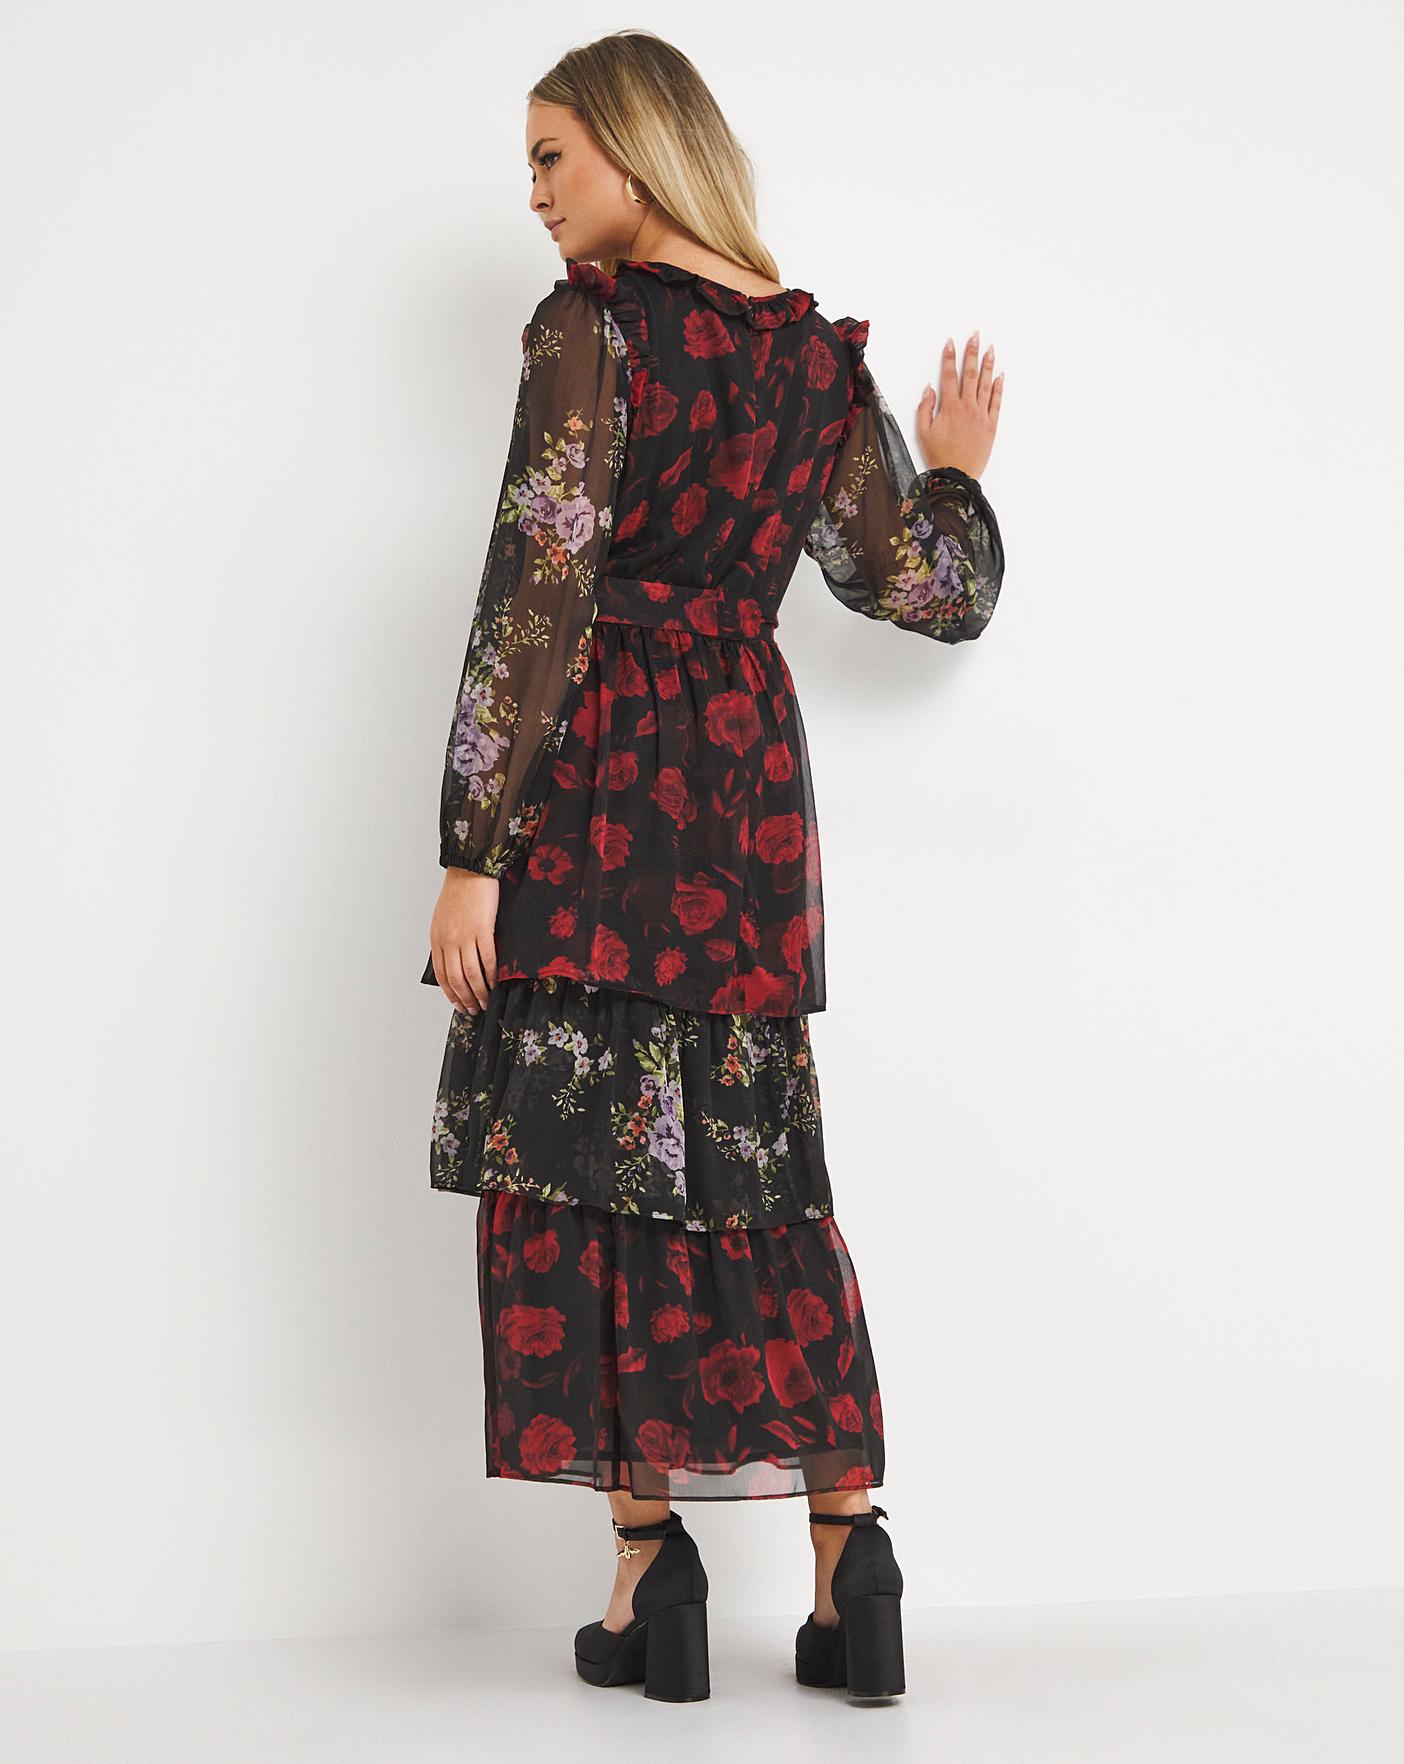 Lovedrobe Mix Print Floral Maxi Dress | Fashion World